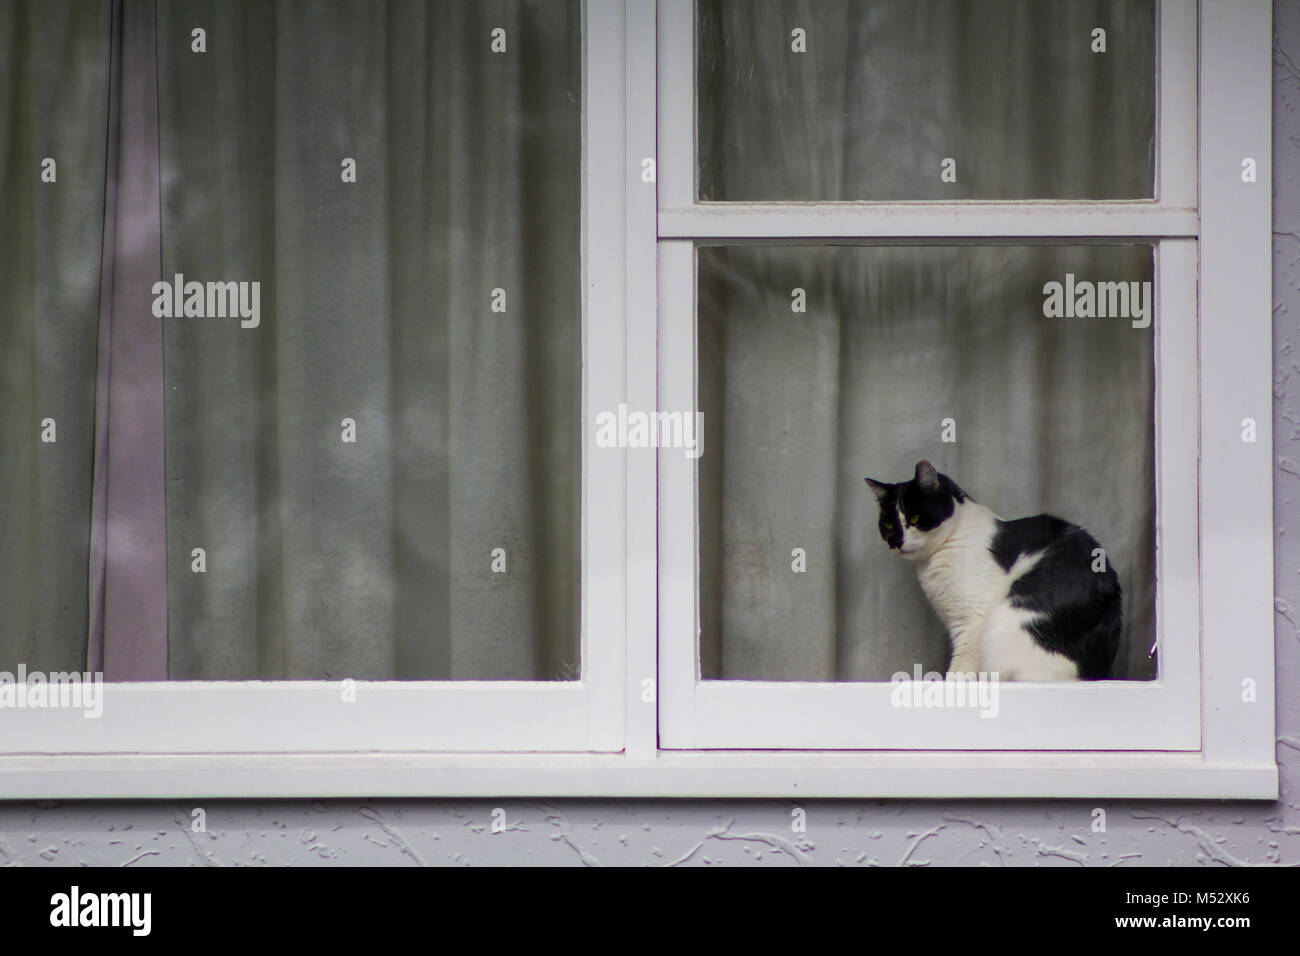 Black and White cat on window Stock Photo